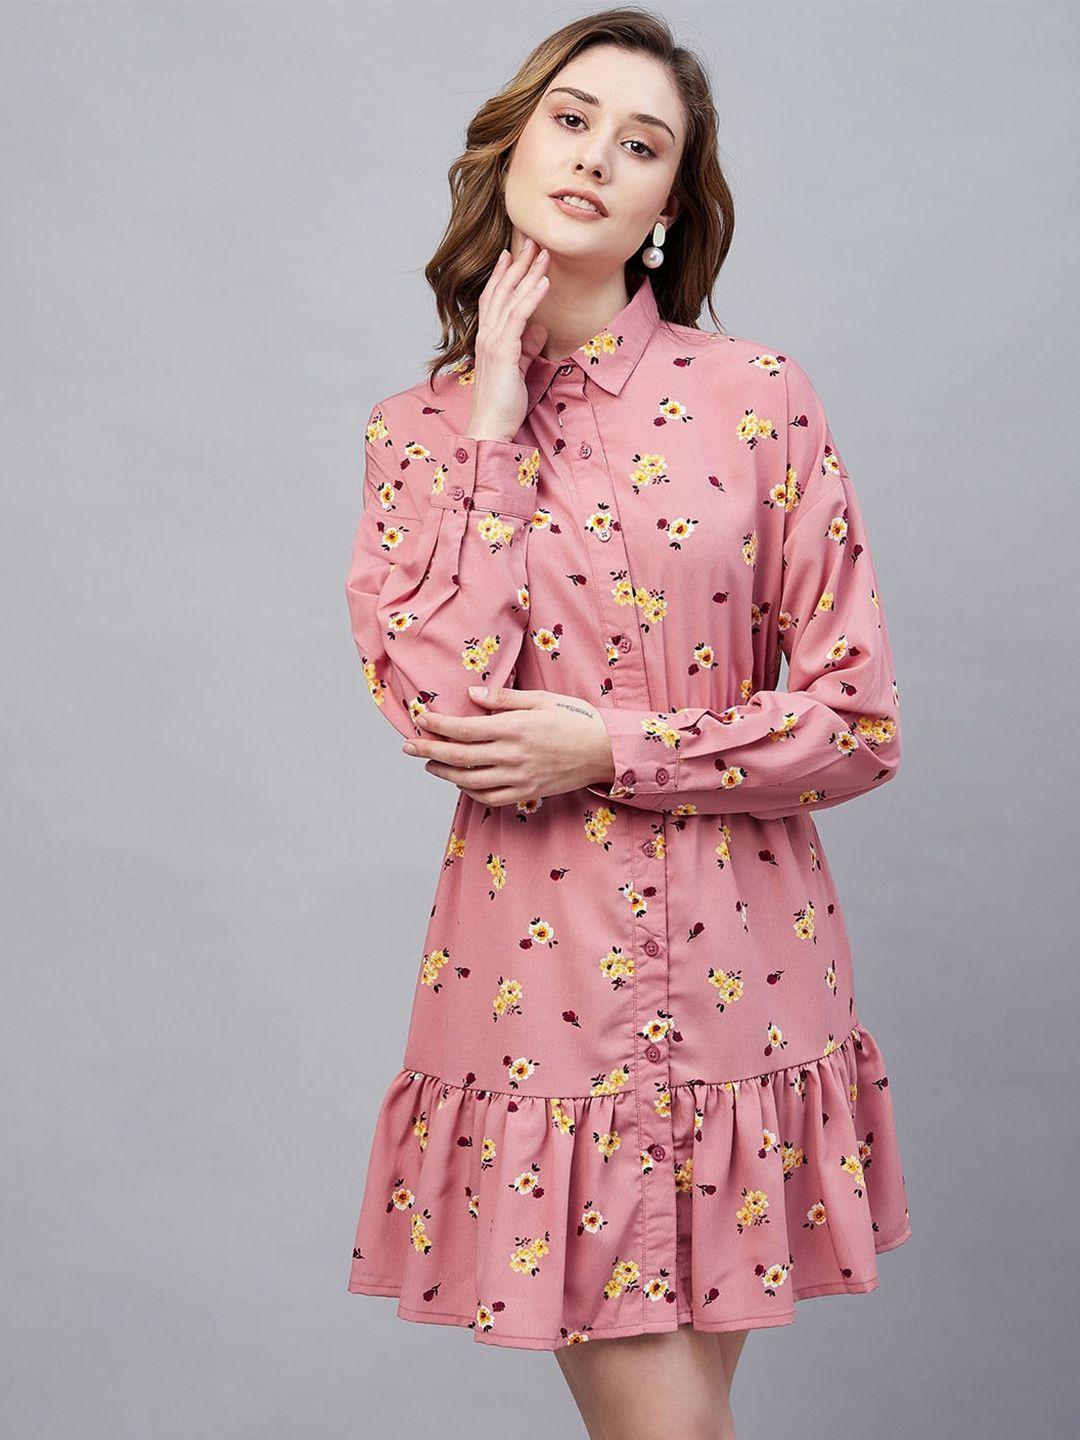 carlton london shirt collar floral georgette shirt dress